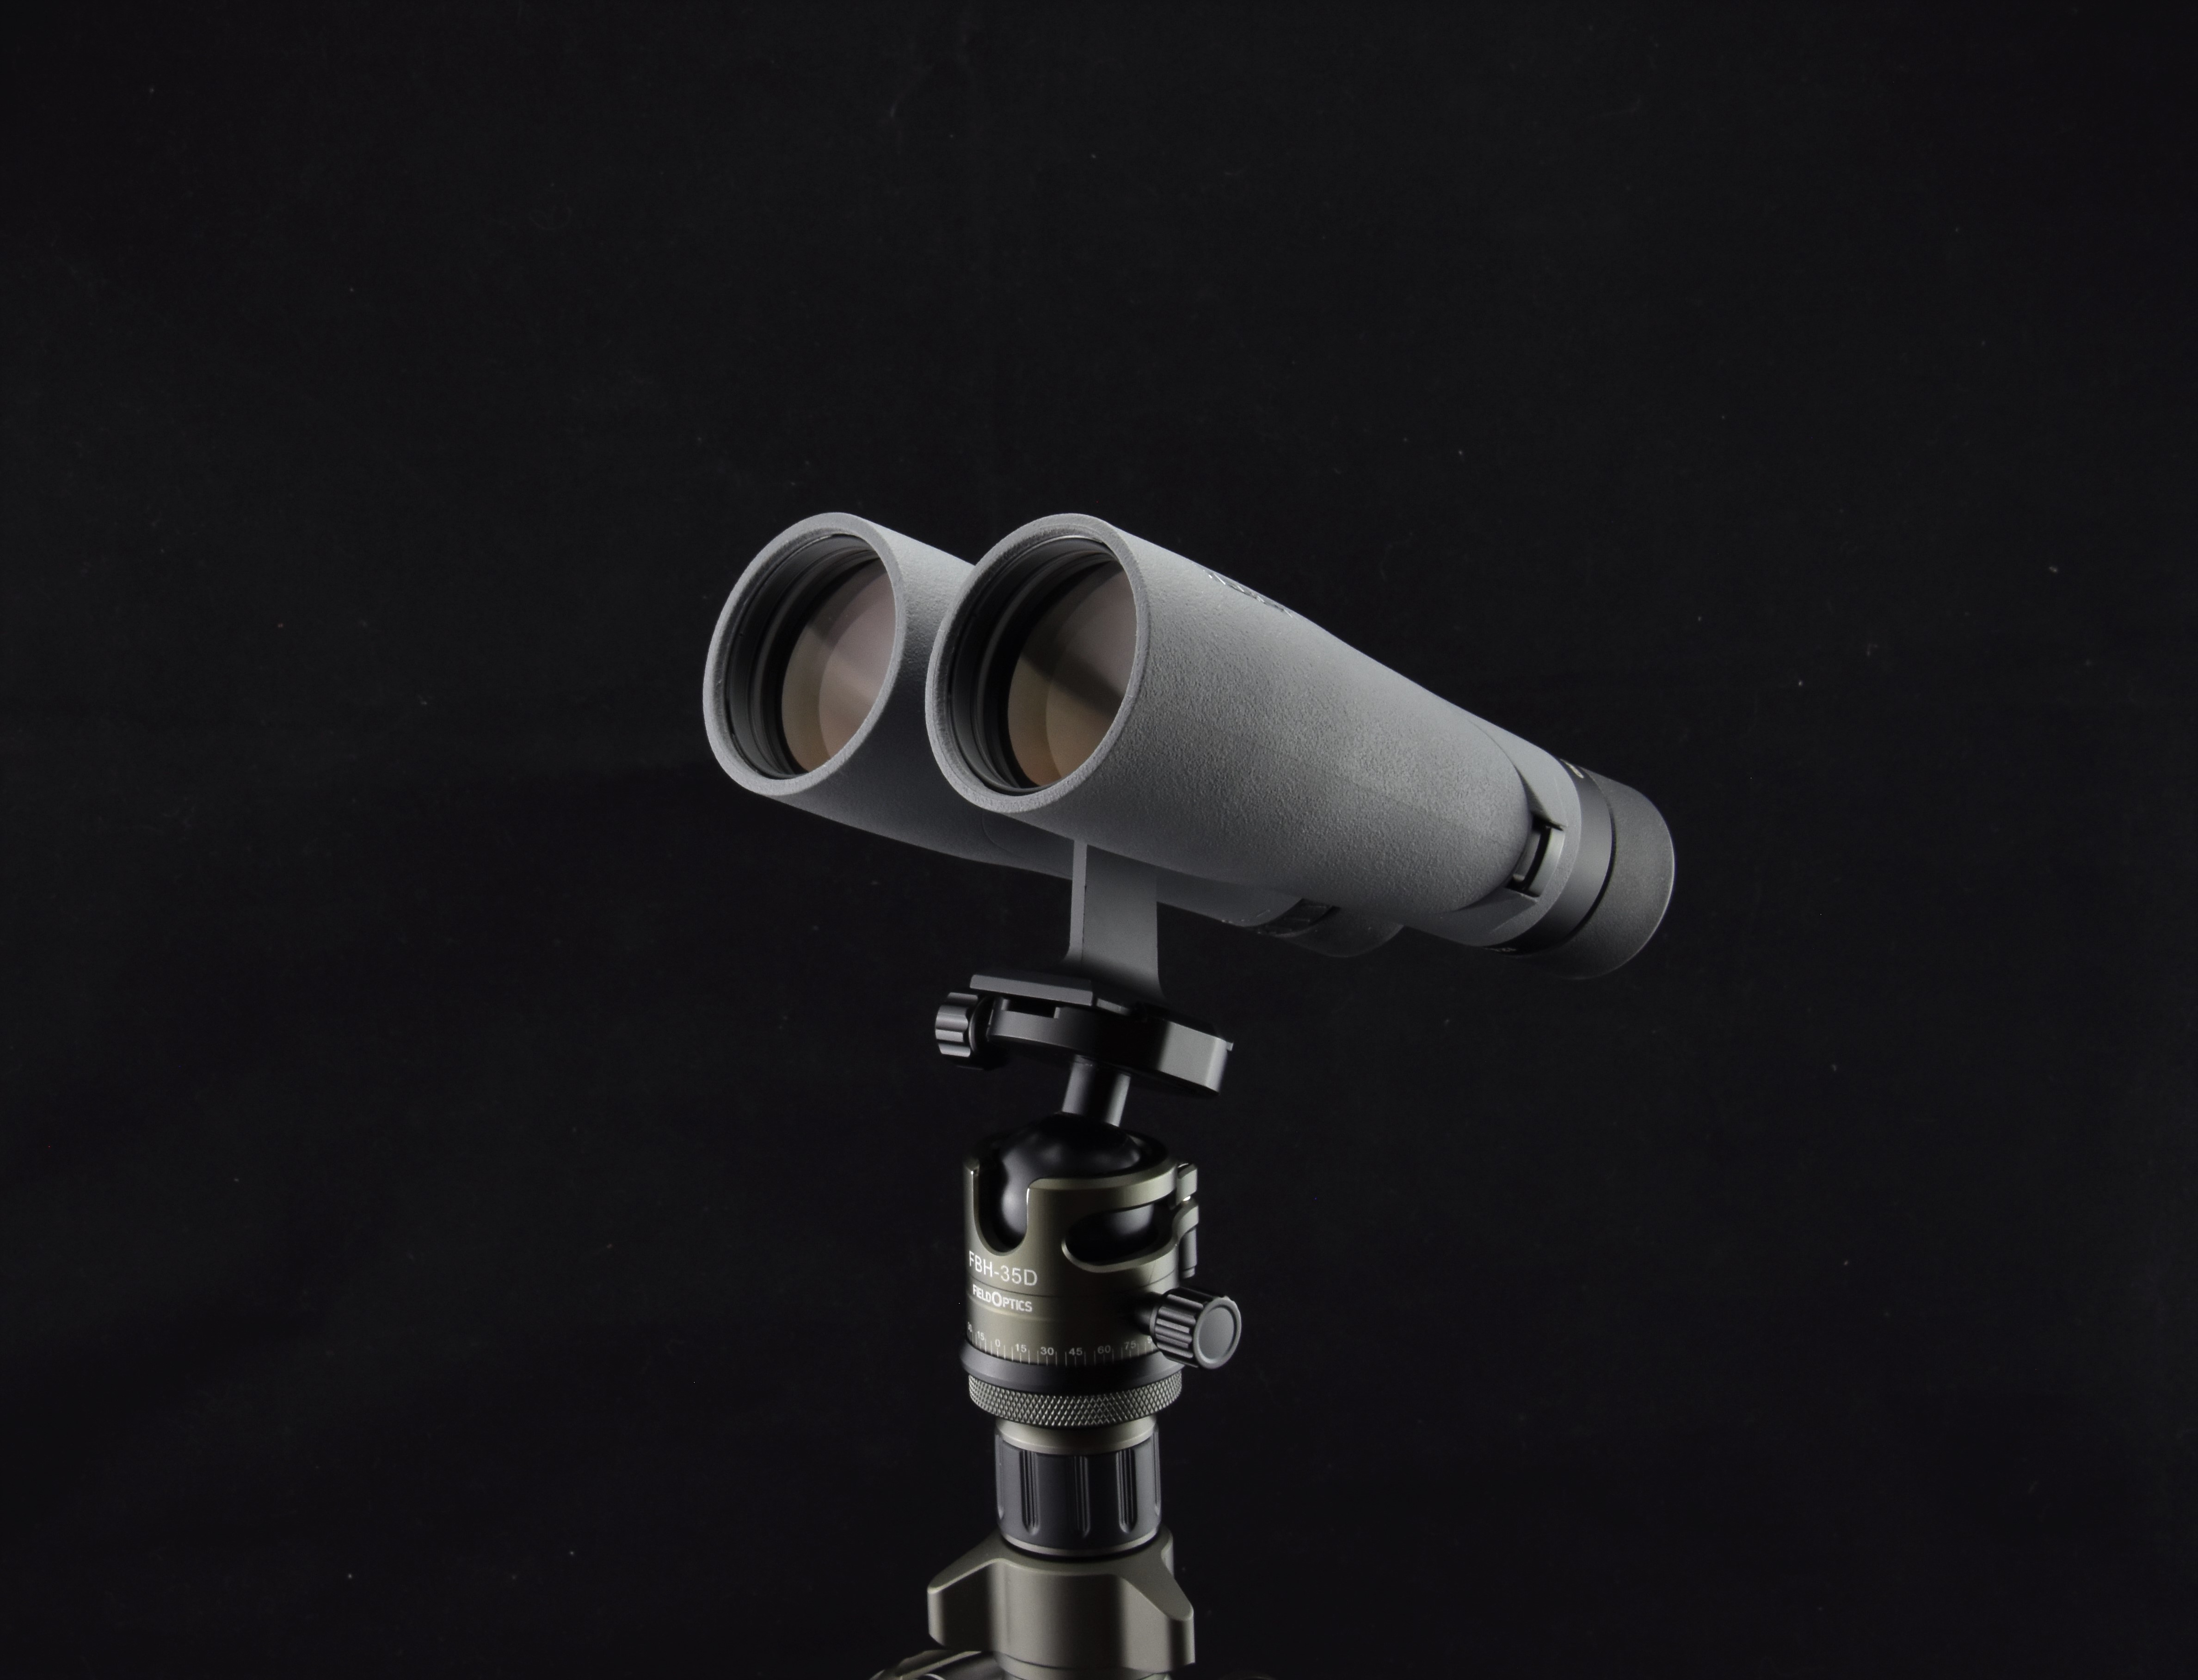 TORIC 10x50 Binocular - The Low Light Leader